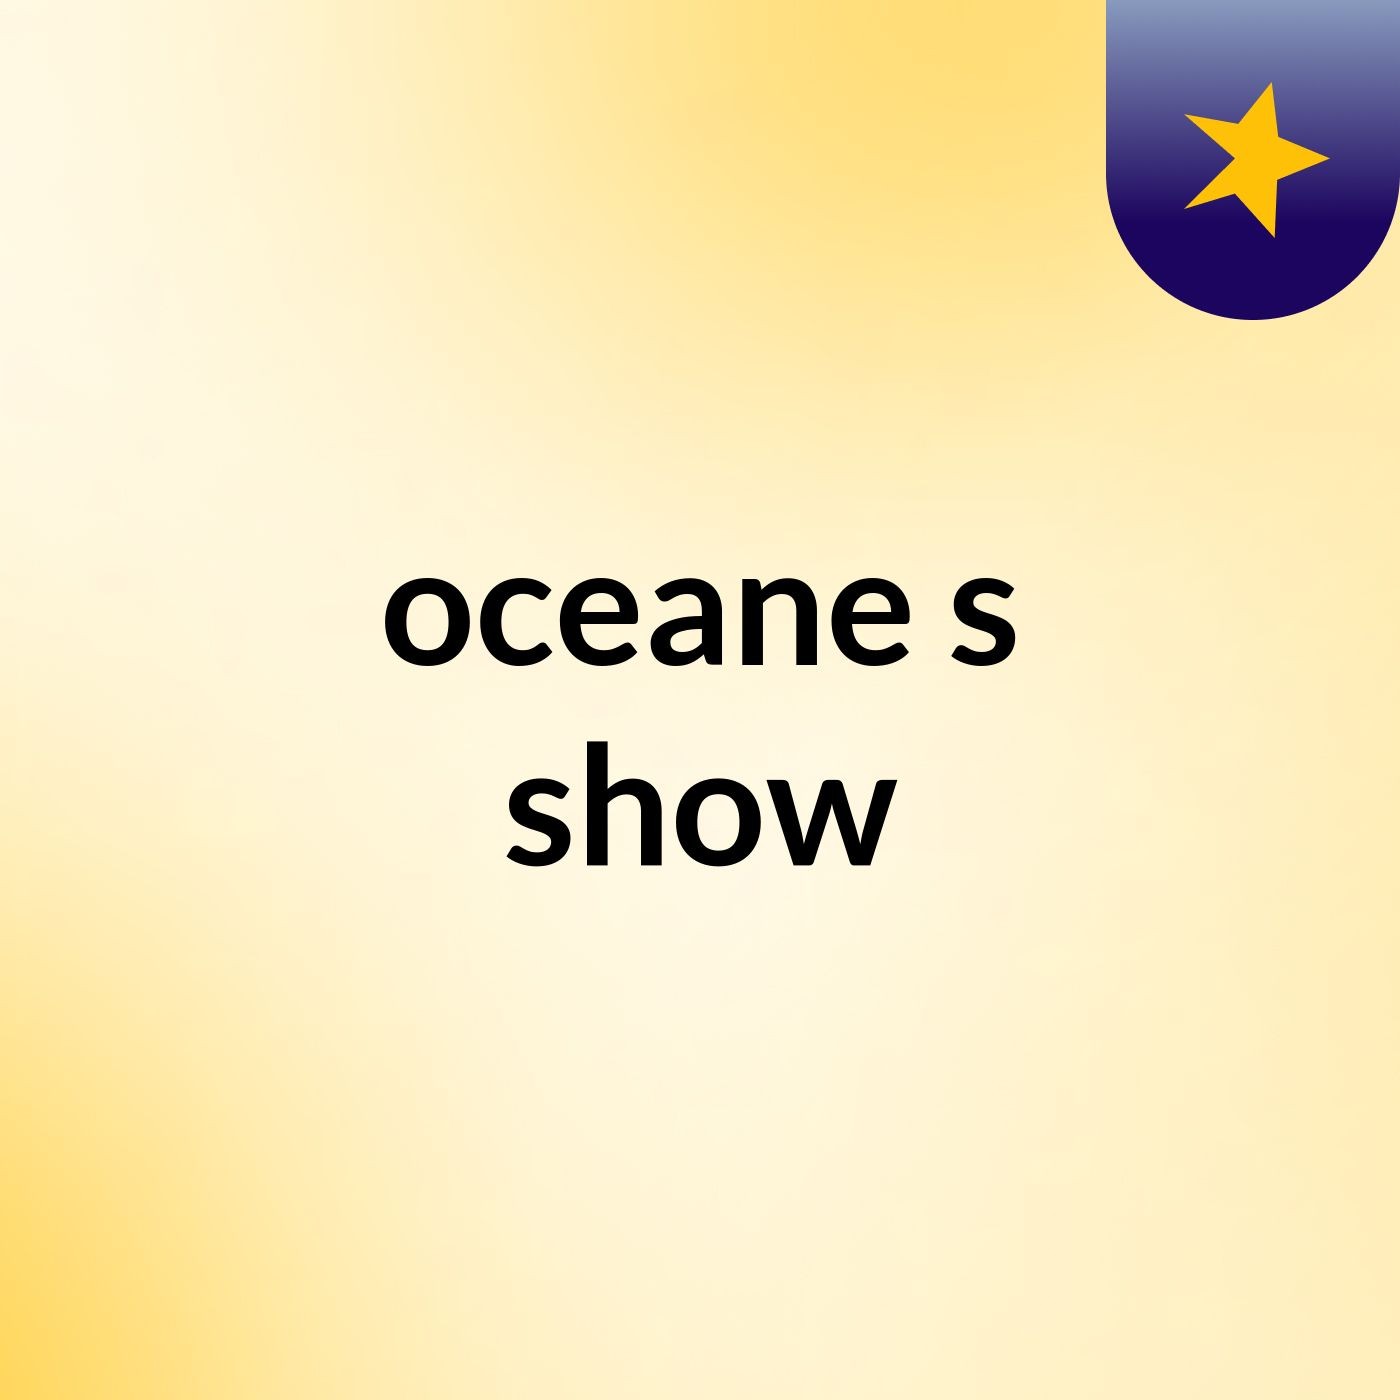 oceane's show